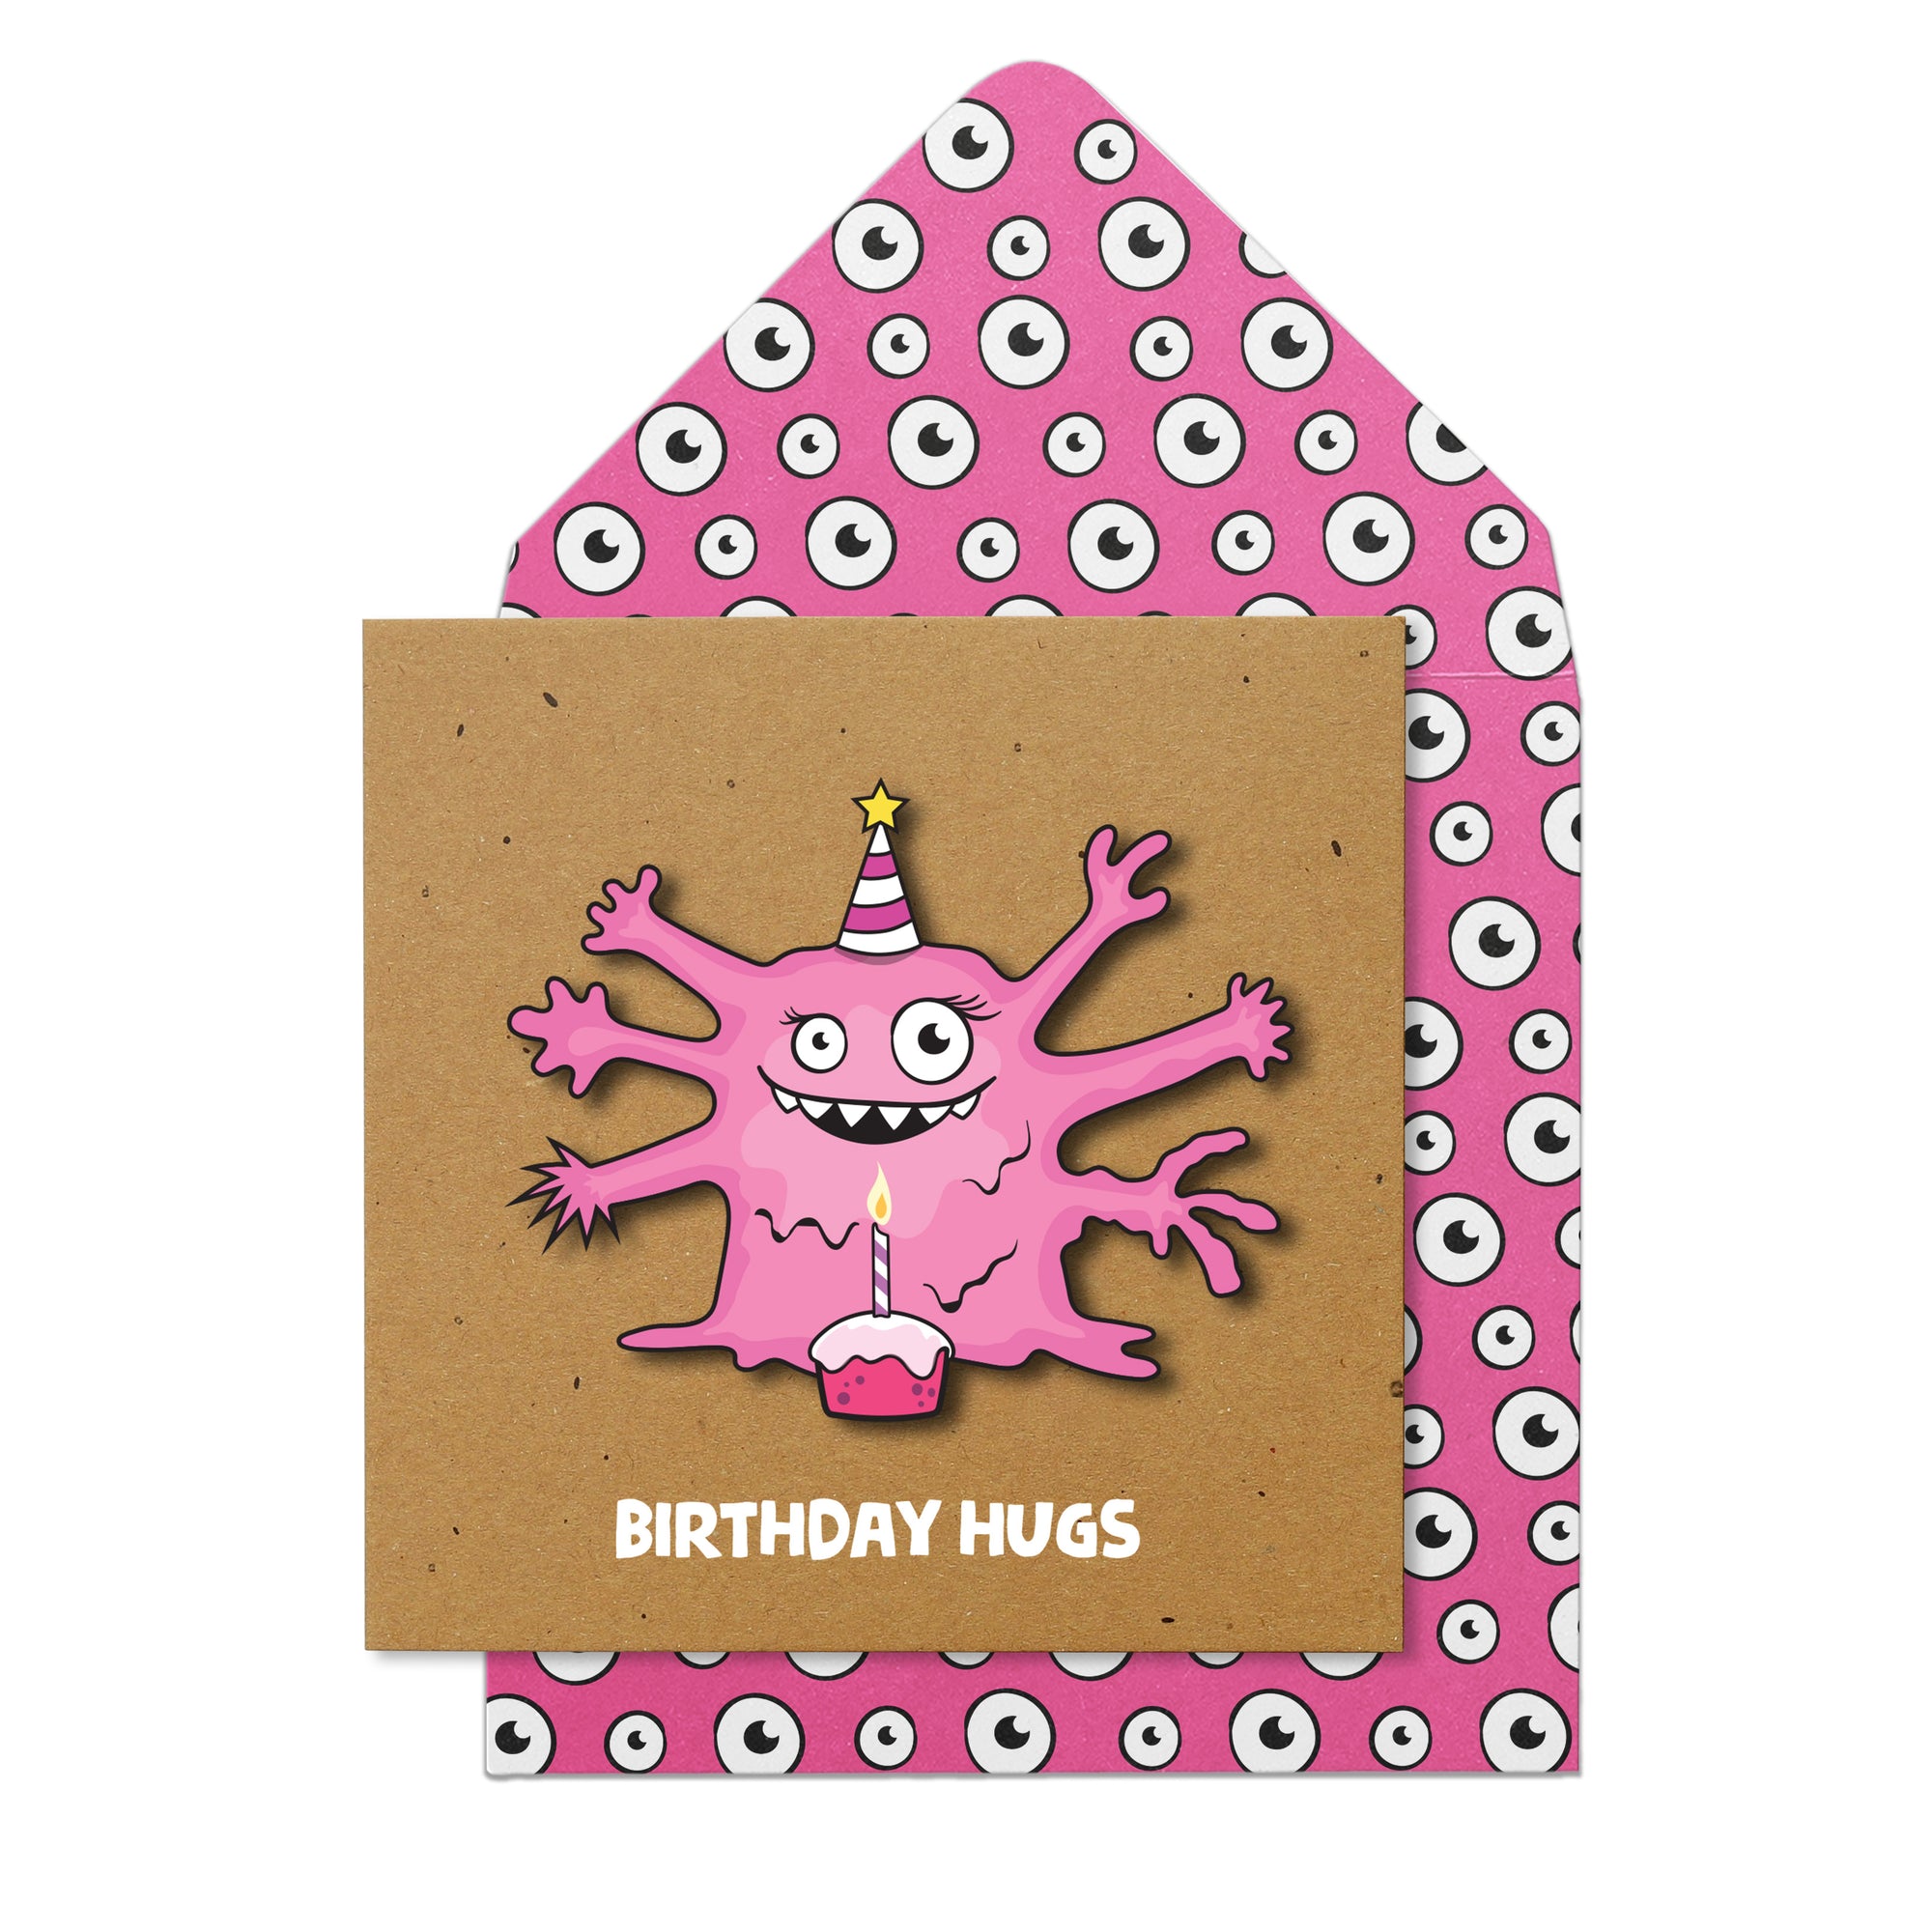 Birthday Hugs' Pink Monster